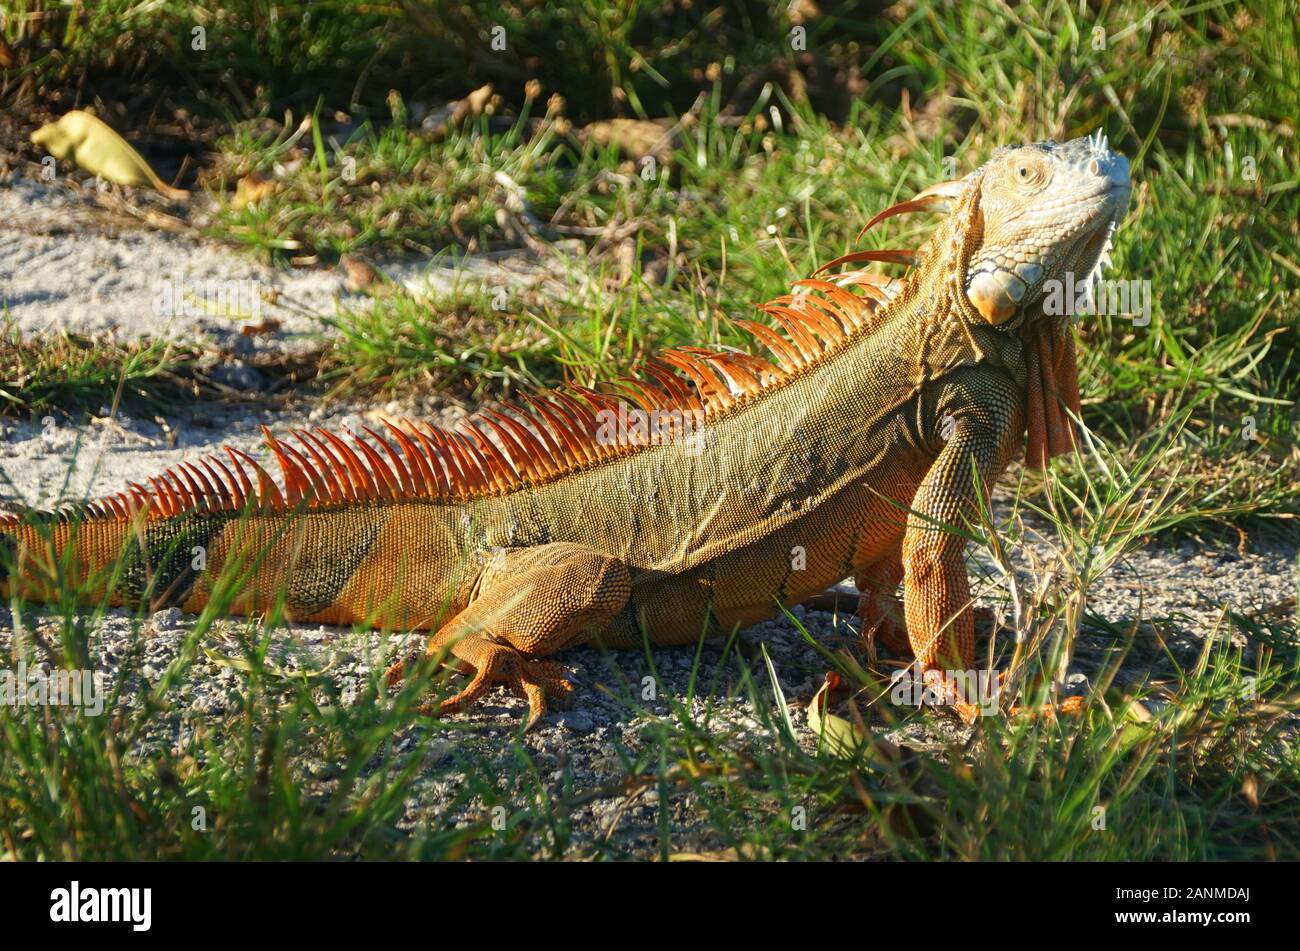 A red iguana on the ground near Dania Beach, Florida, U.S.A Stock Photo